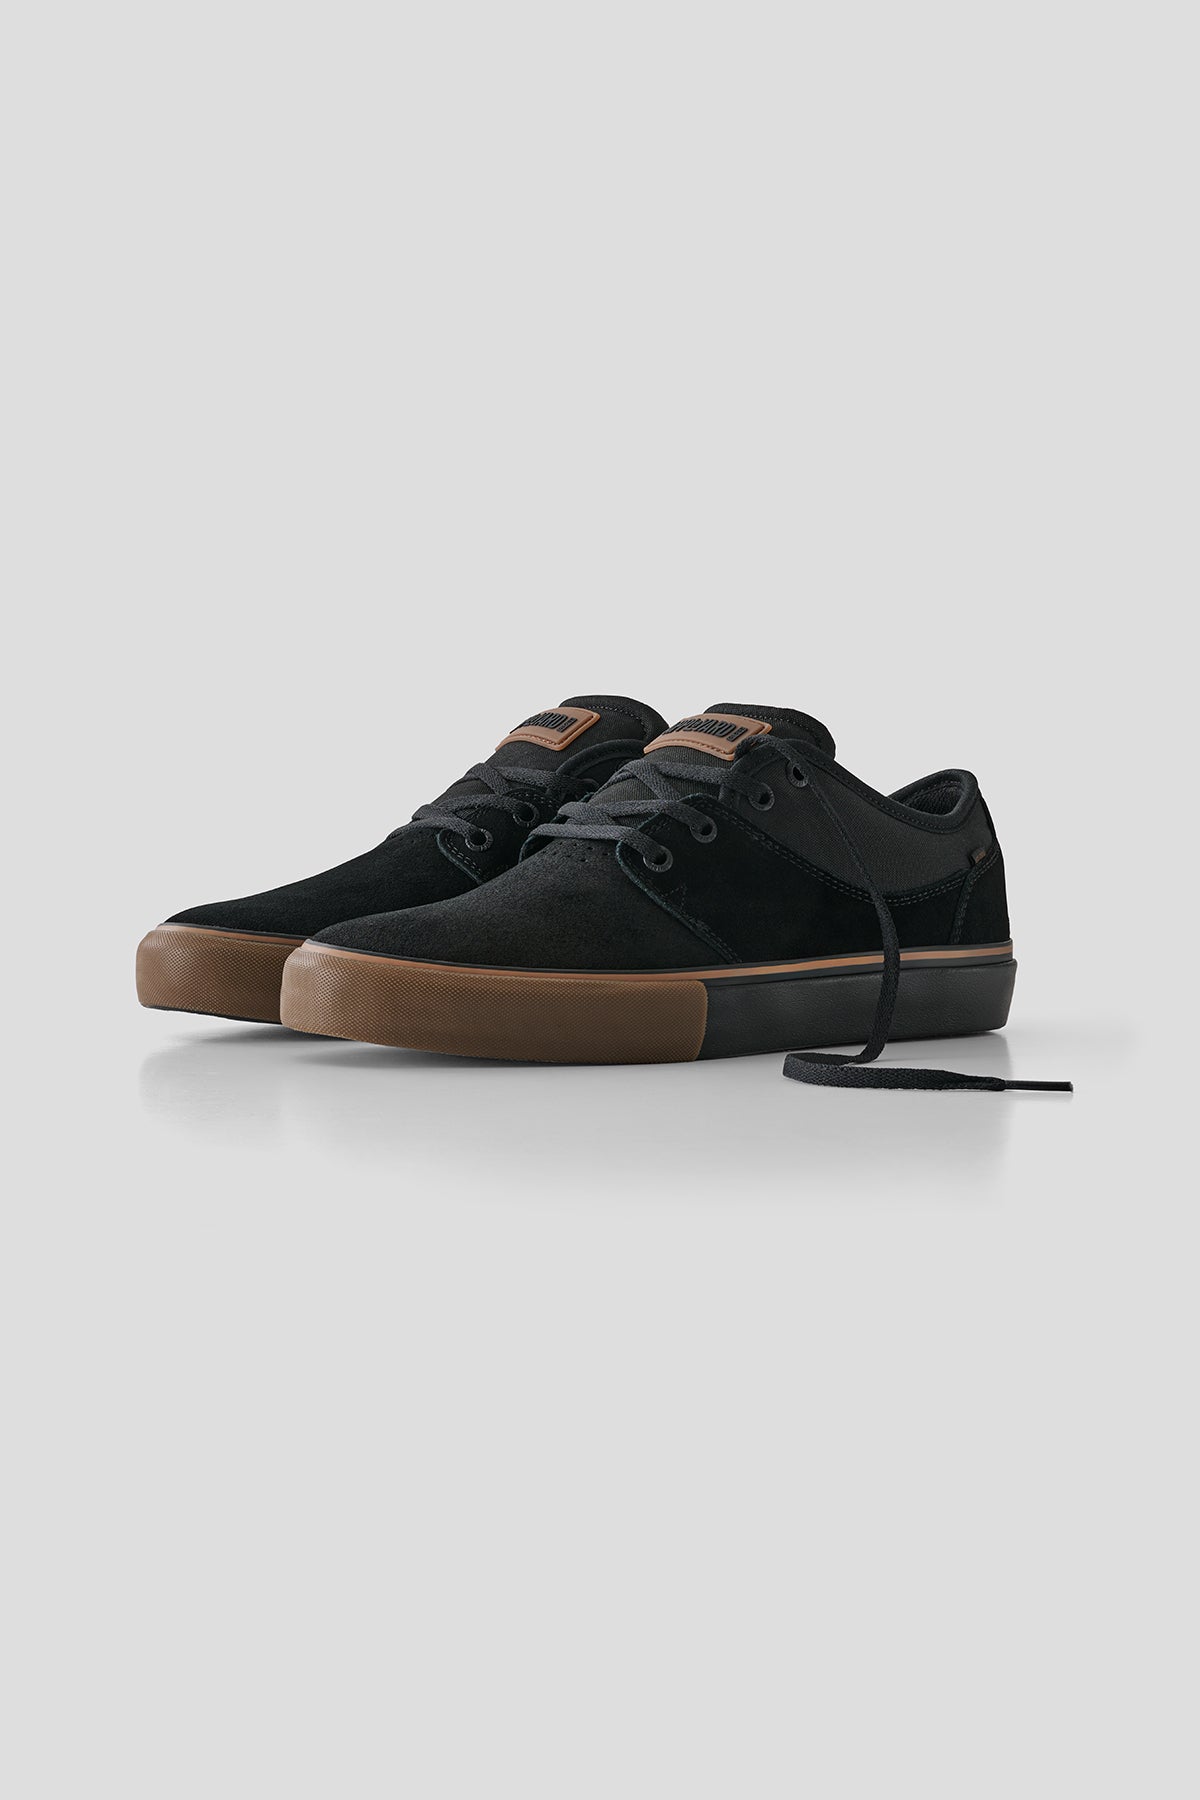 Globe - Mahalo - Preto/Goma - skateboard Sapatos